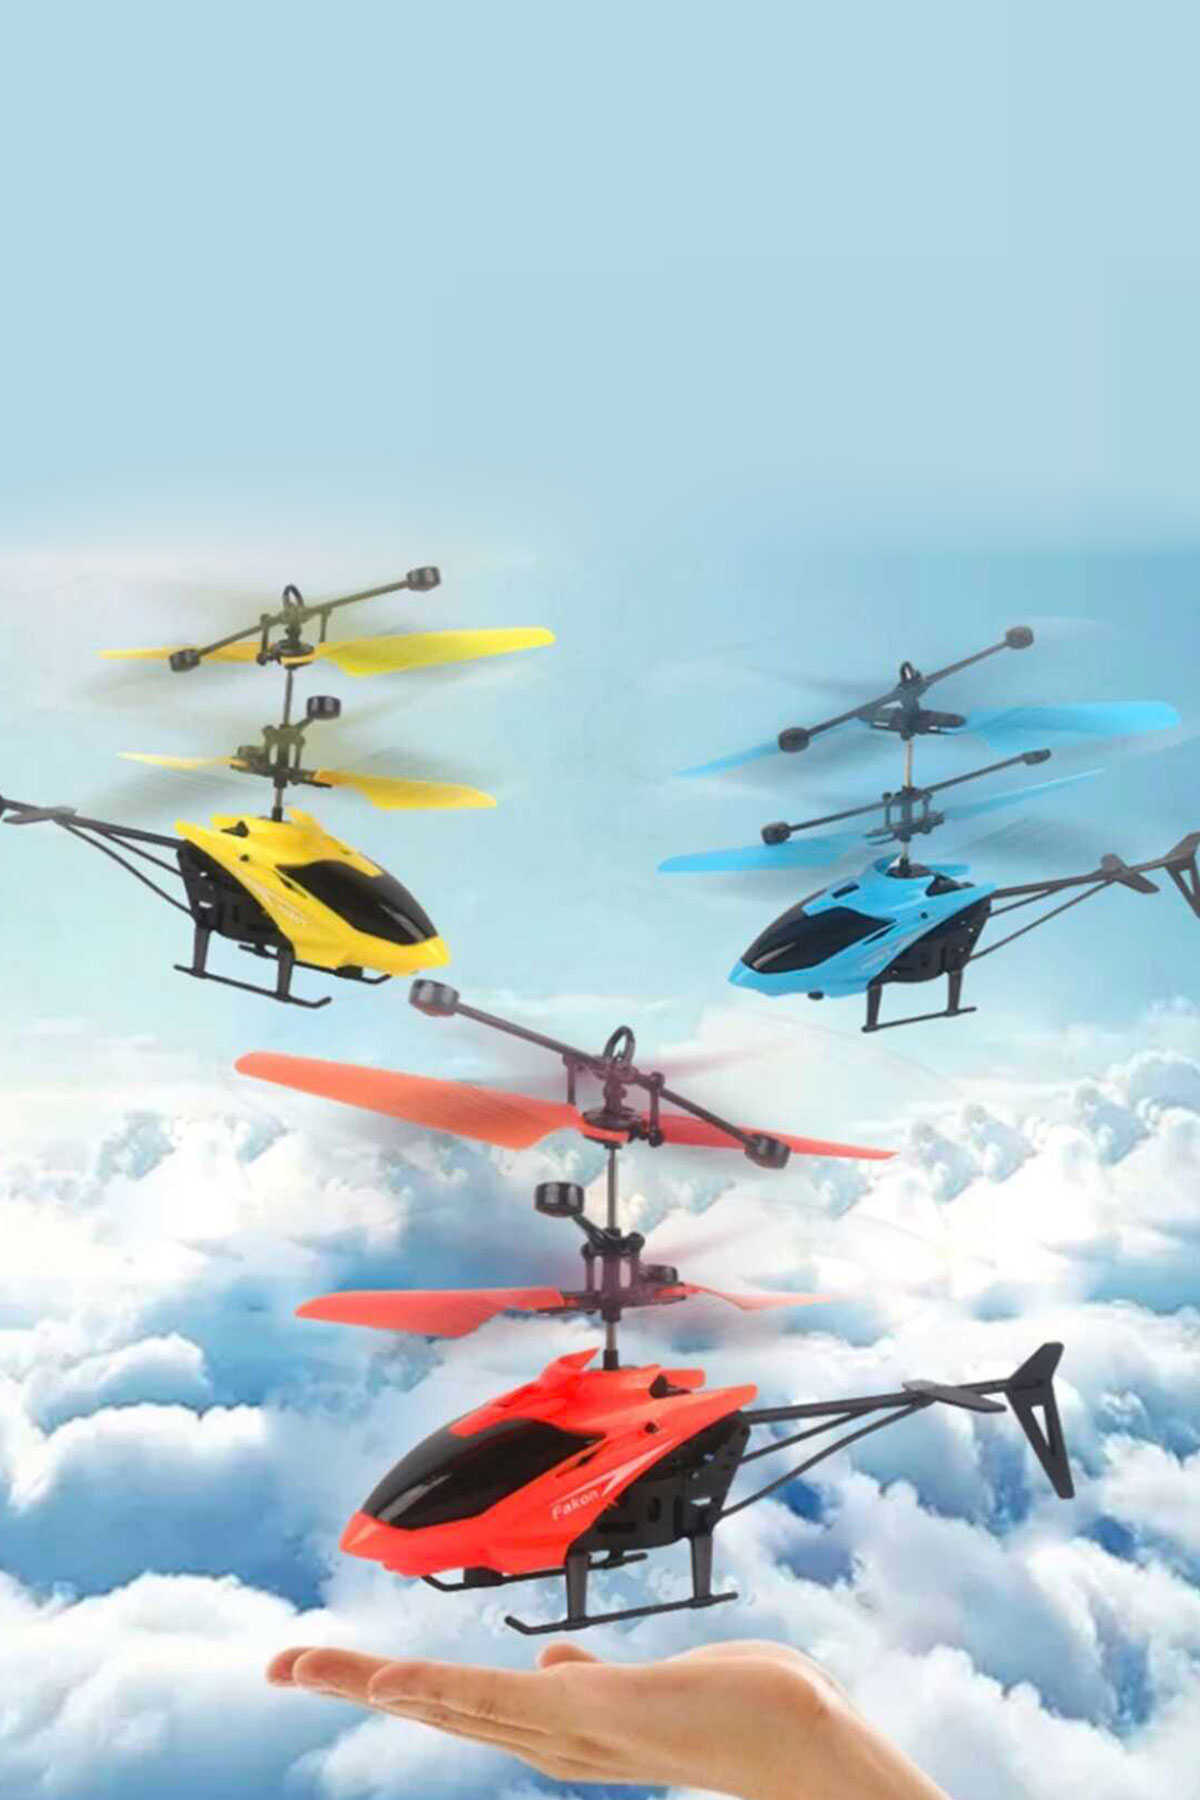 هلیکوپتر اسباب بازی شارژی کنترلی دو رنگ قرمز مشکی